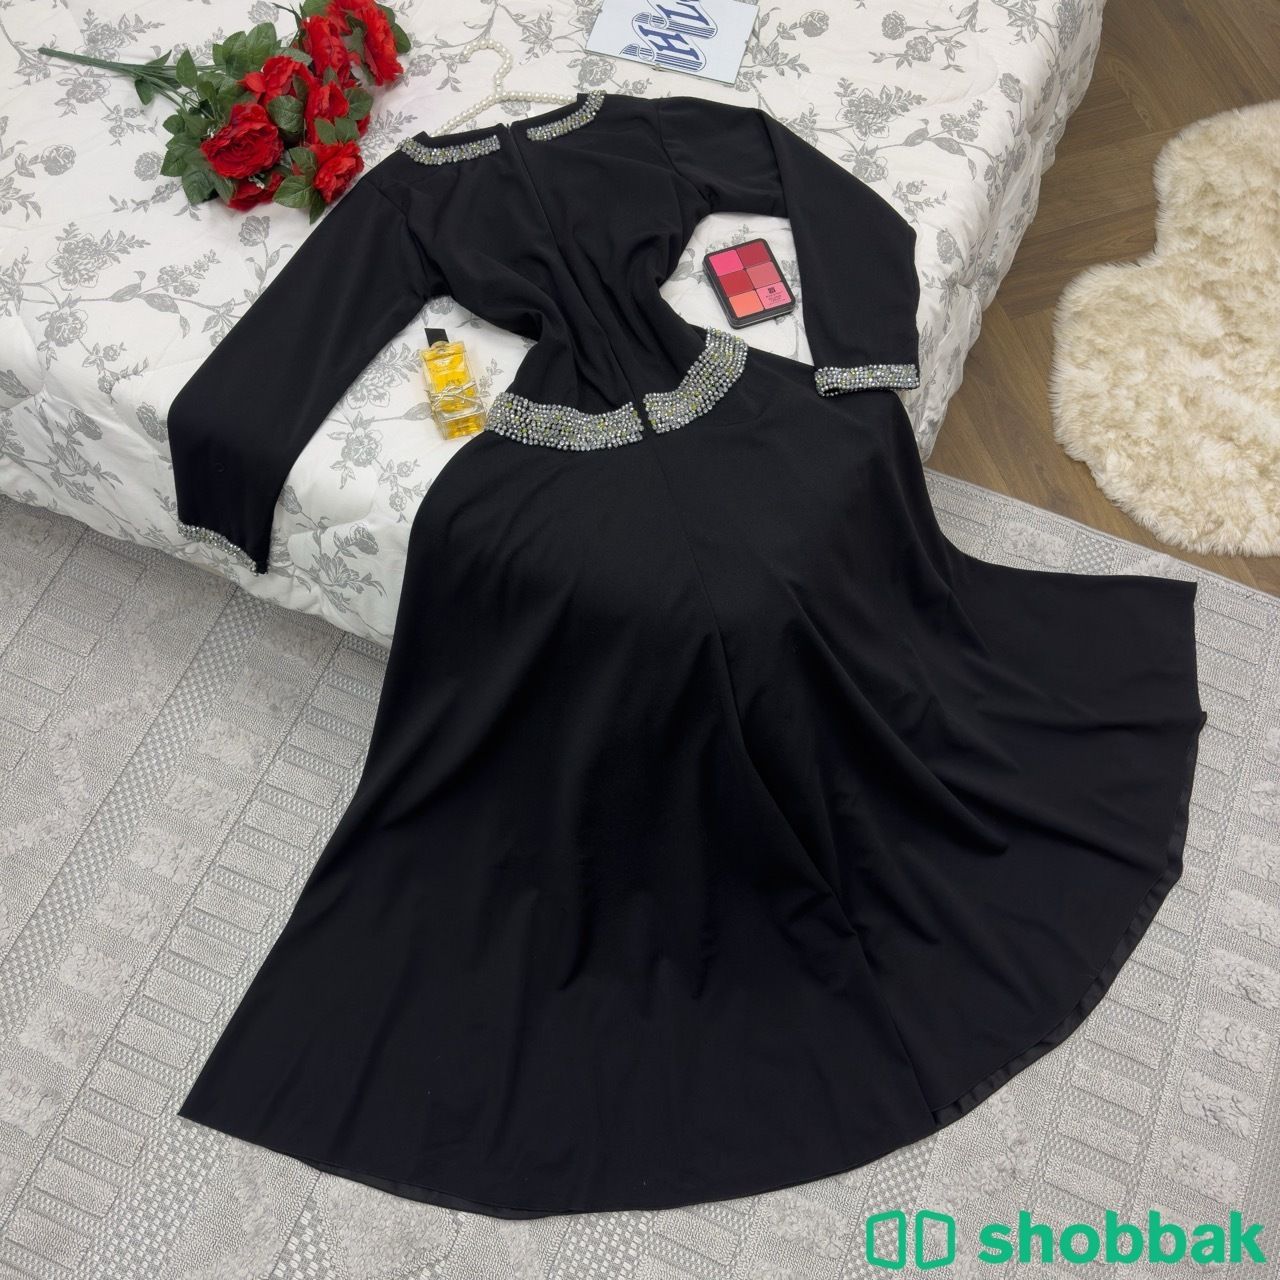 فستان كريب ليكرا فخم  Shobbak Saudi Arabia